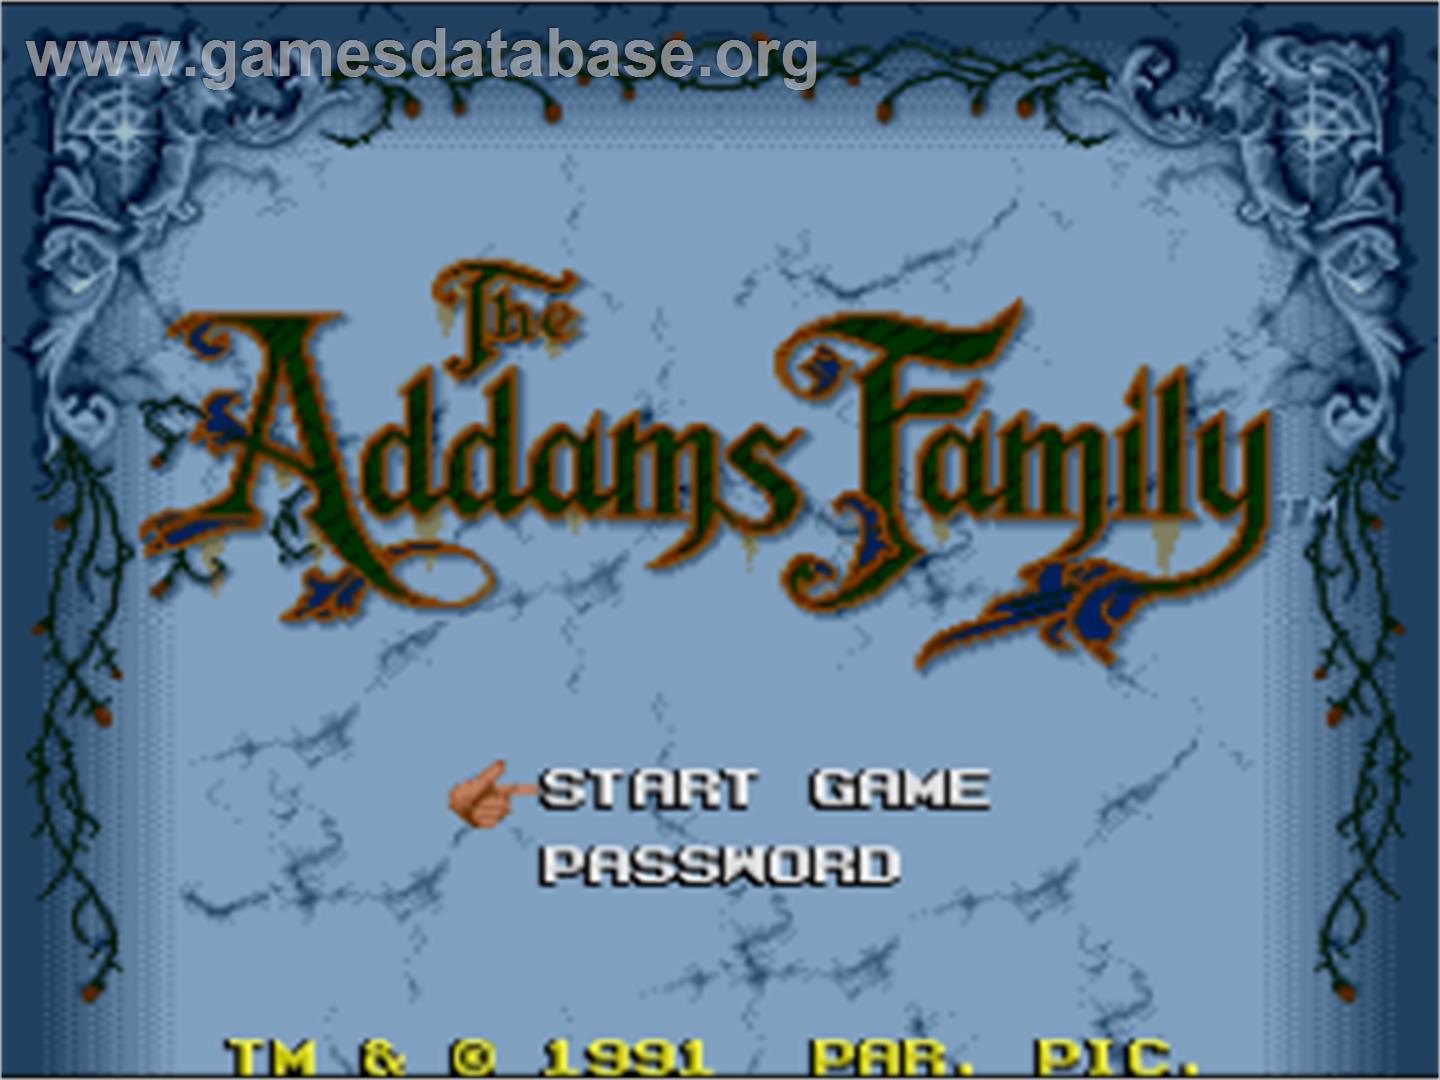 The Addams Family - Nintendo SNES - Artwork - Title Screen